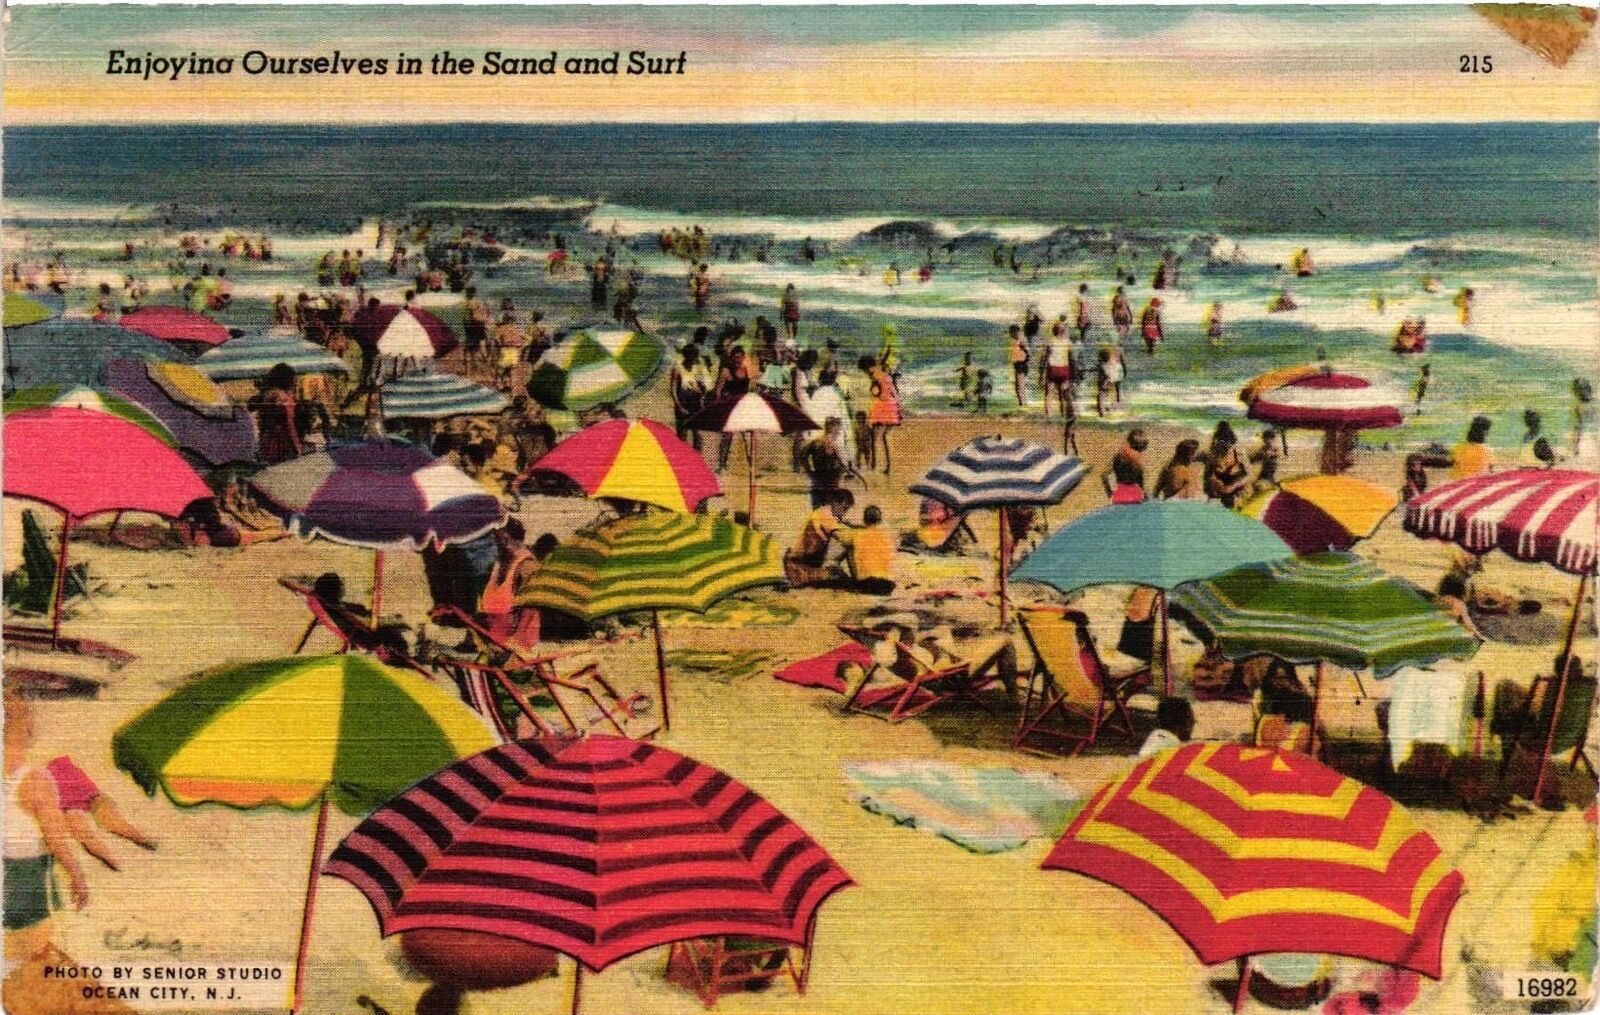 Vintage Postcard- Crowded beach with umbrellas